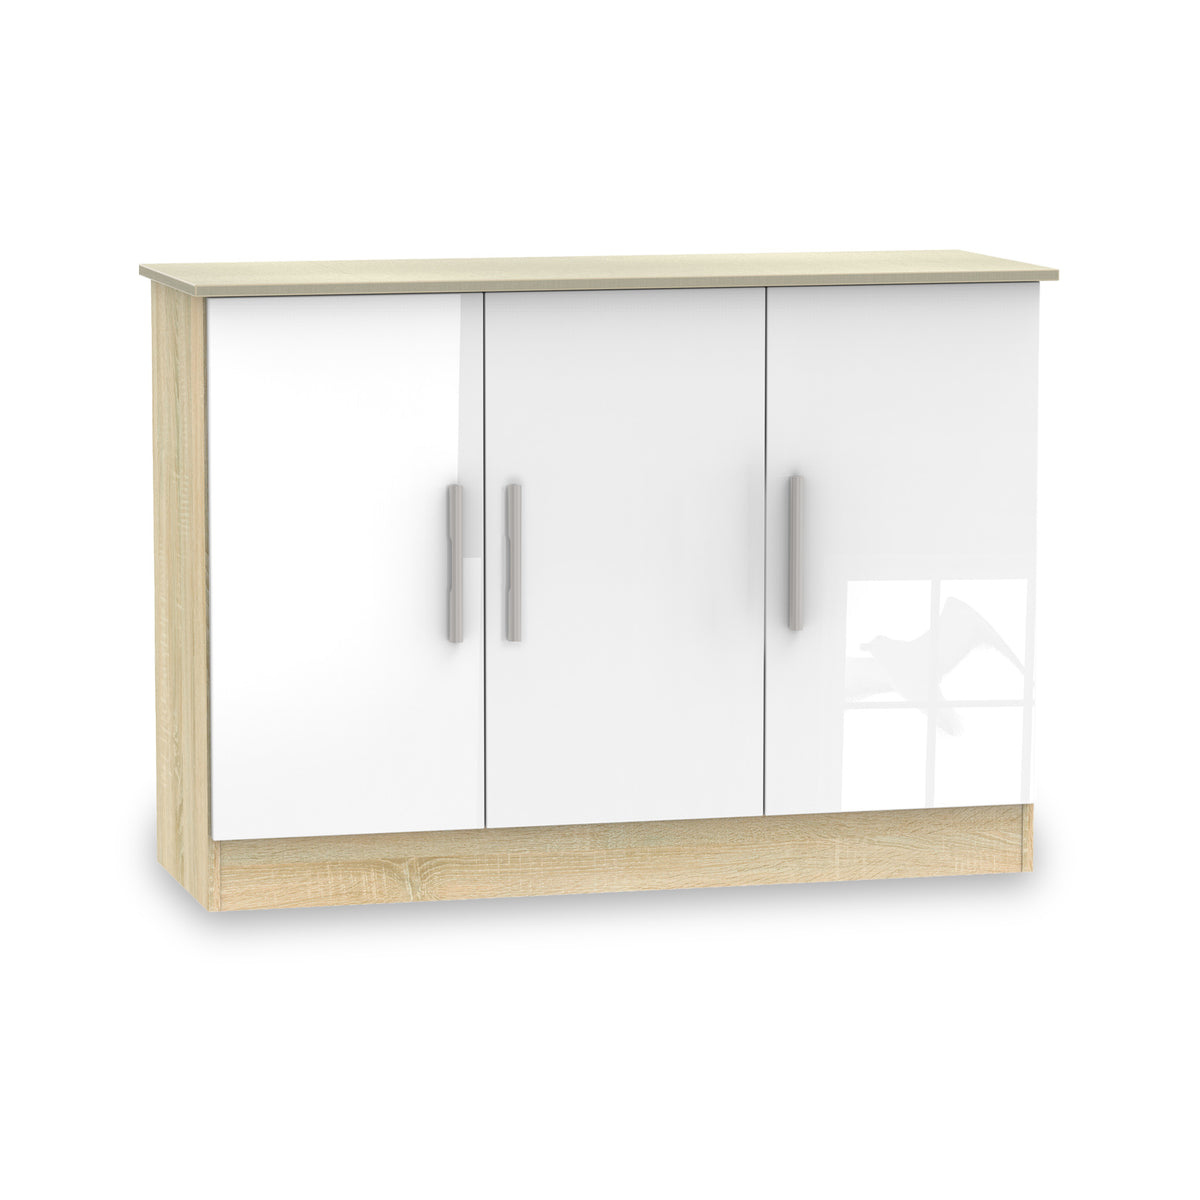 Blakely White & Light Oak 3 Door Sideboard Cabinet from Roseland Furniture